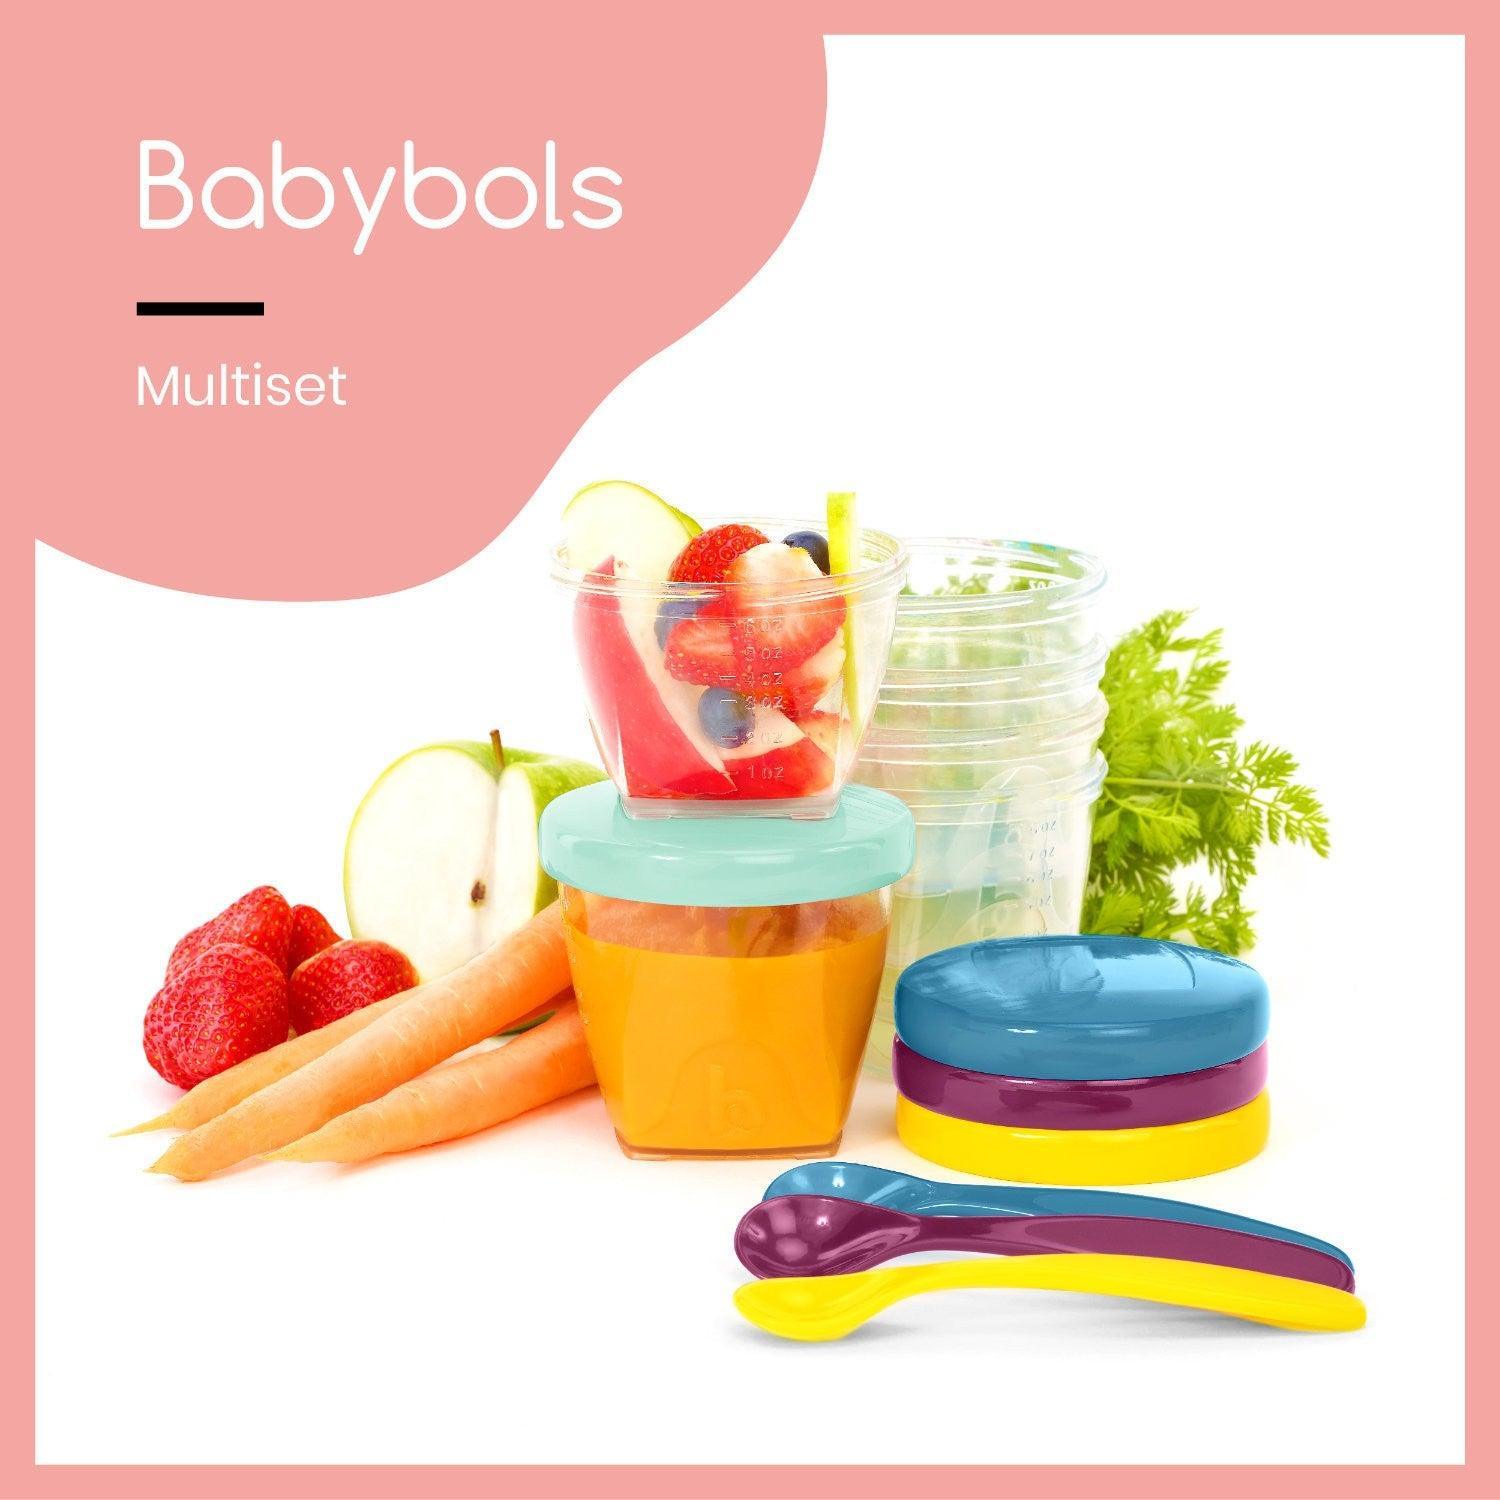 Babymoov - Babybols - Food Containers Multiset - Mari Kali Stores Cyprus